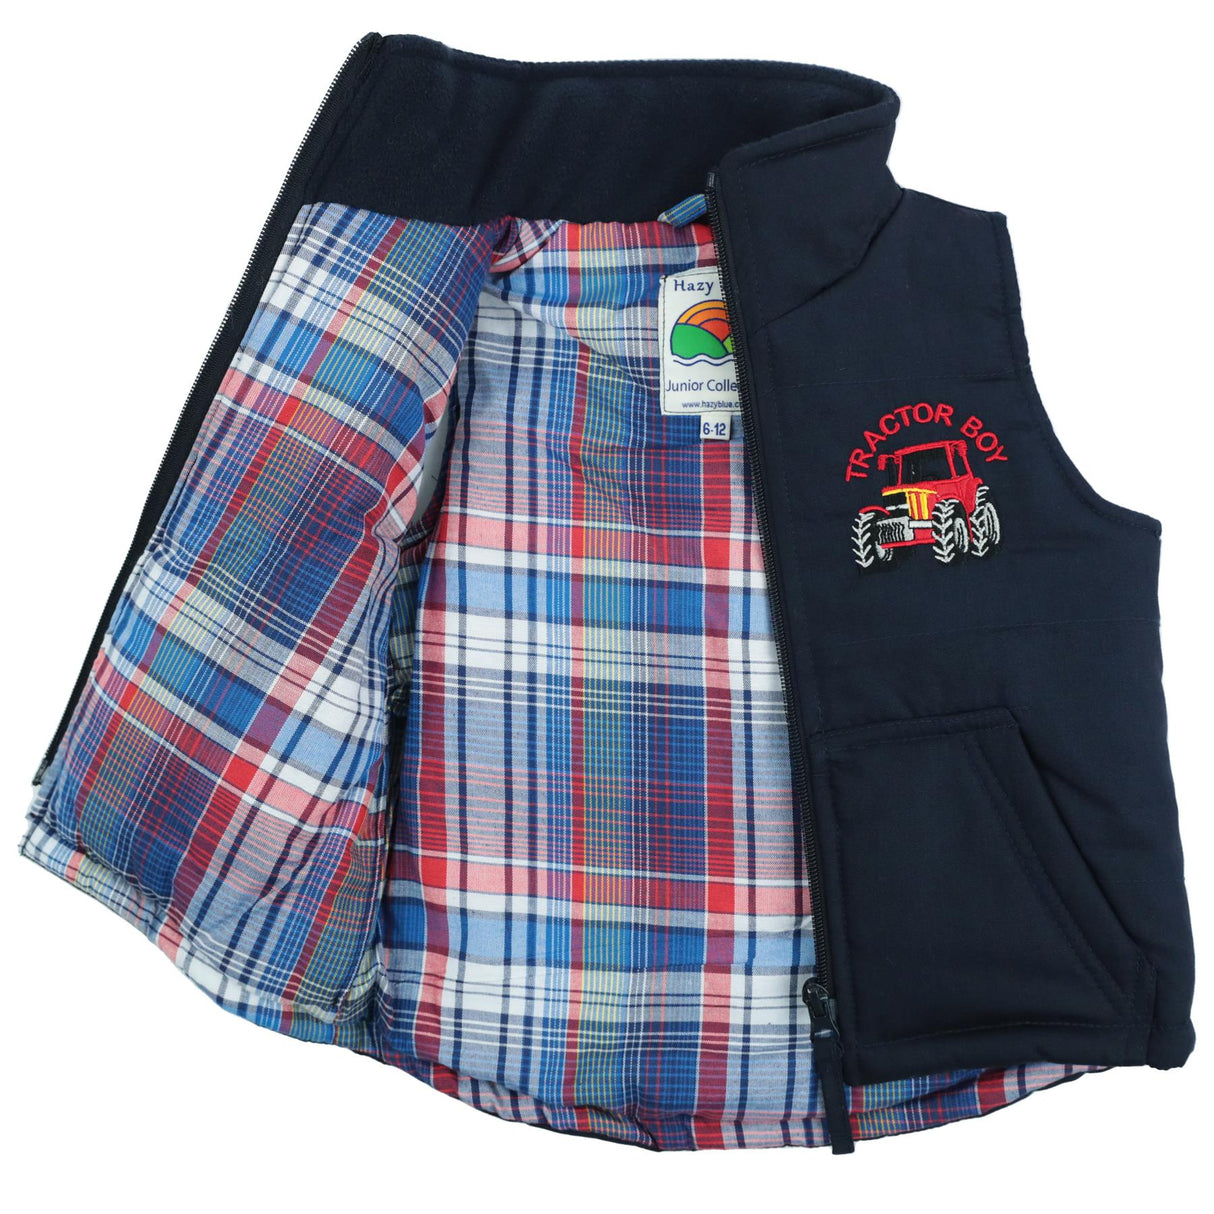 Hazy Blue Kids Gilet - Premium clothing from Hazy Blue - Just $19.99! Shop now at Warwickshire Clothing